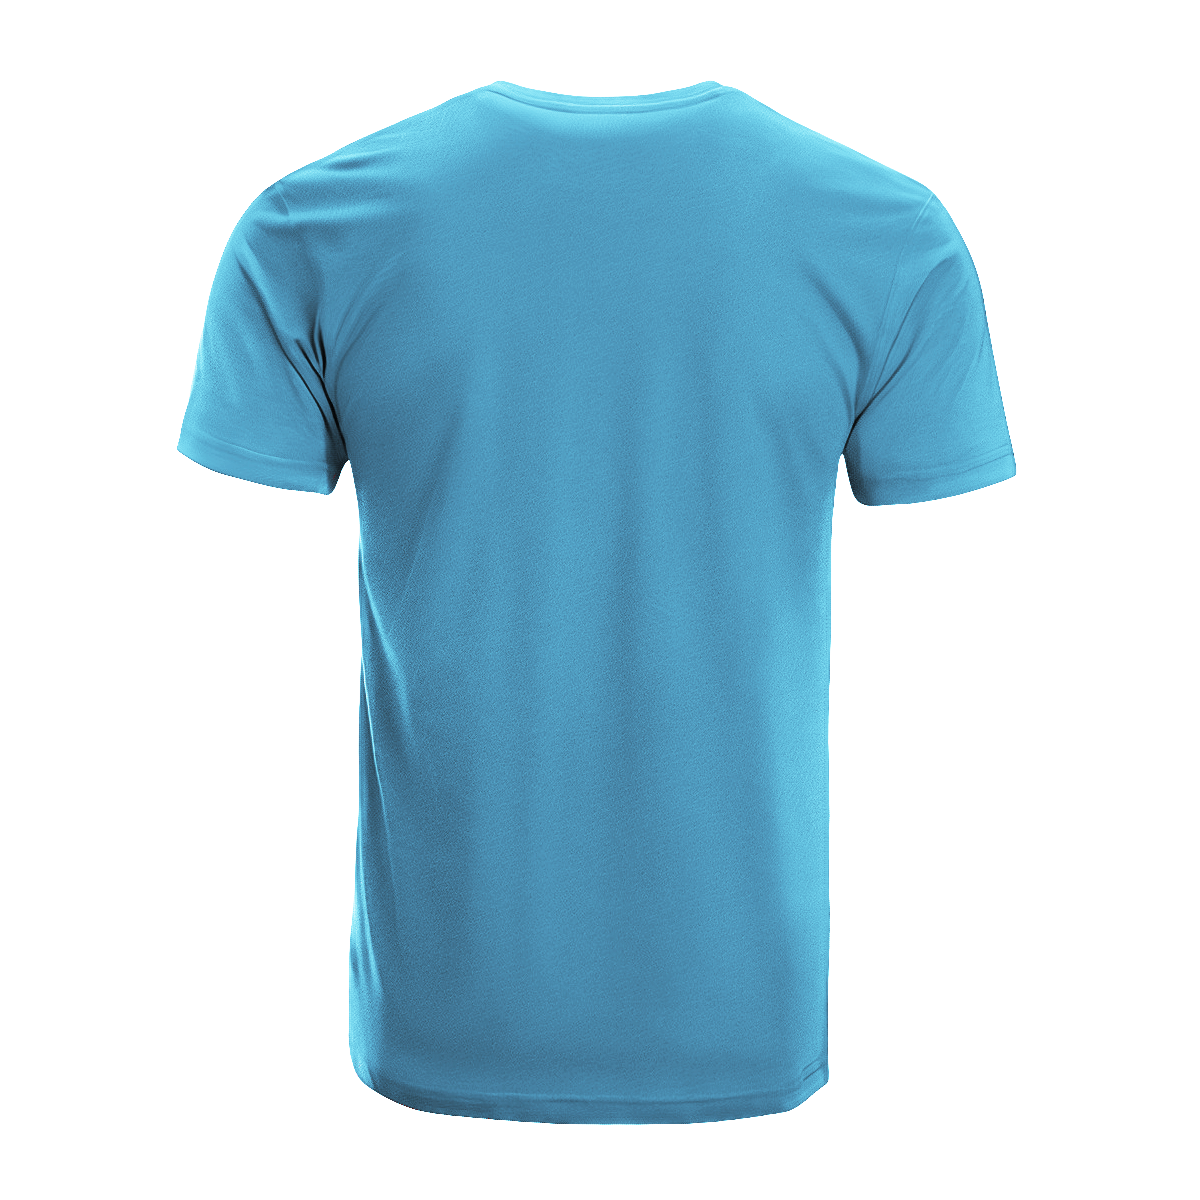 Beveridge Tartan Crest T-shirt - I'm not yelling style